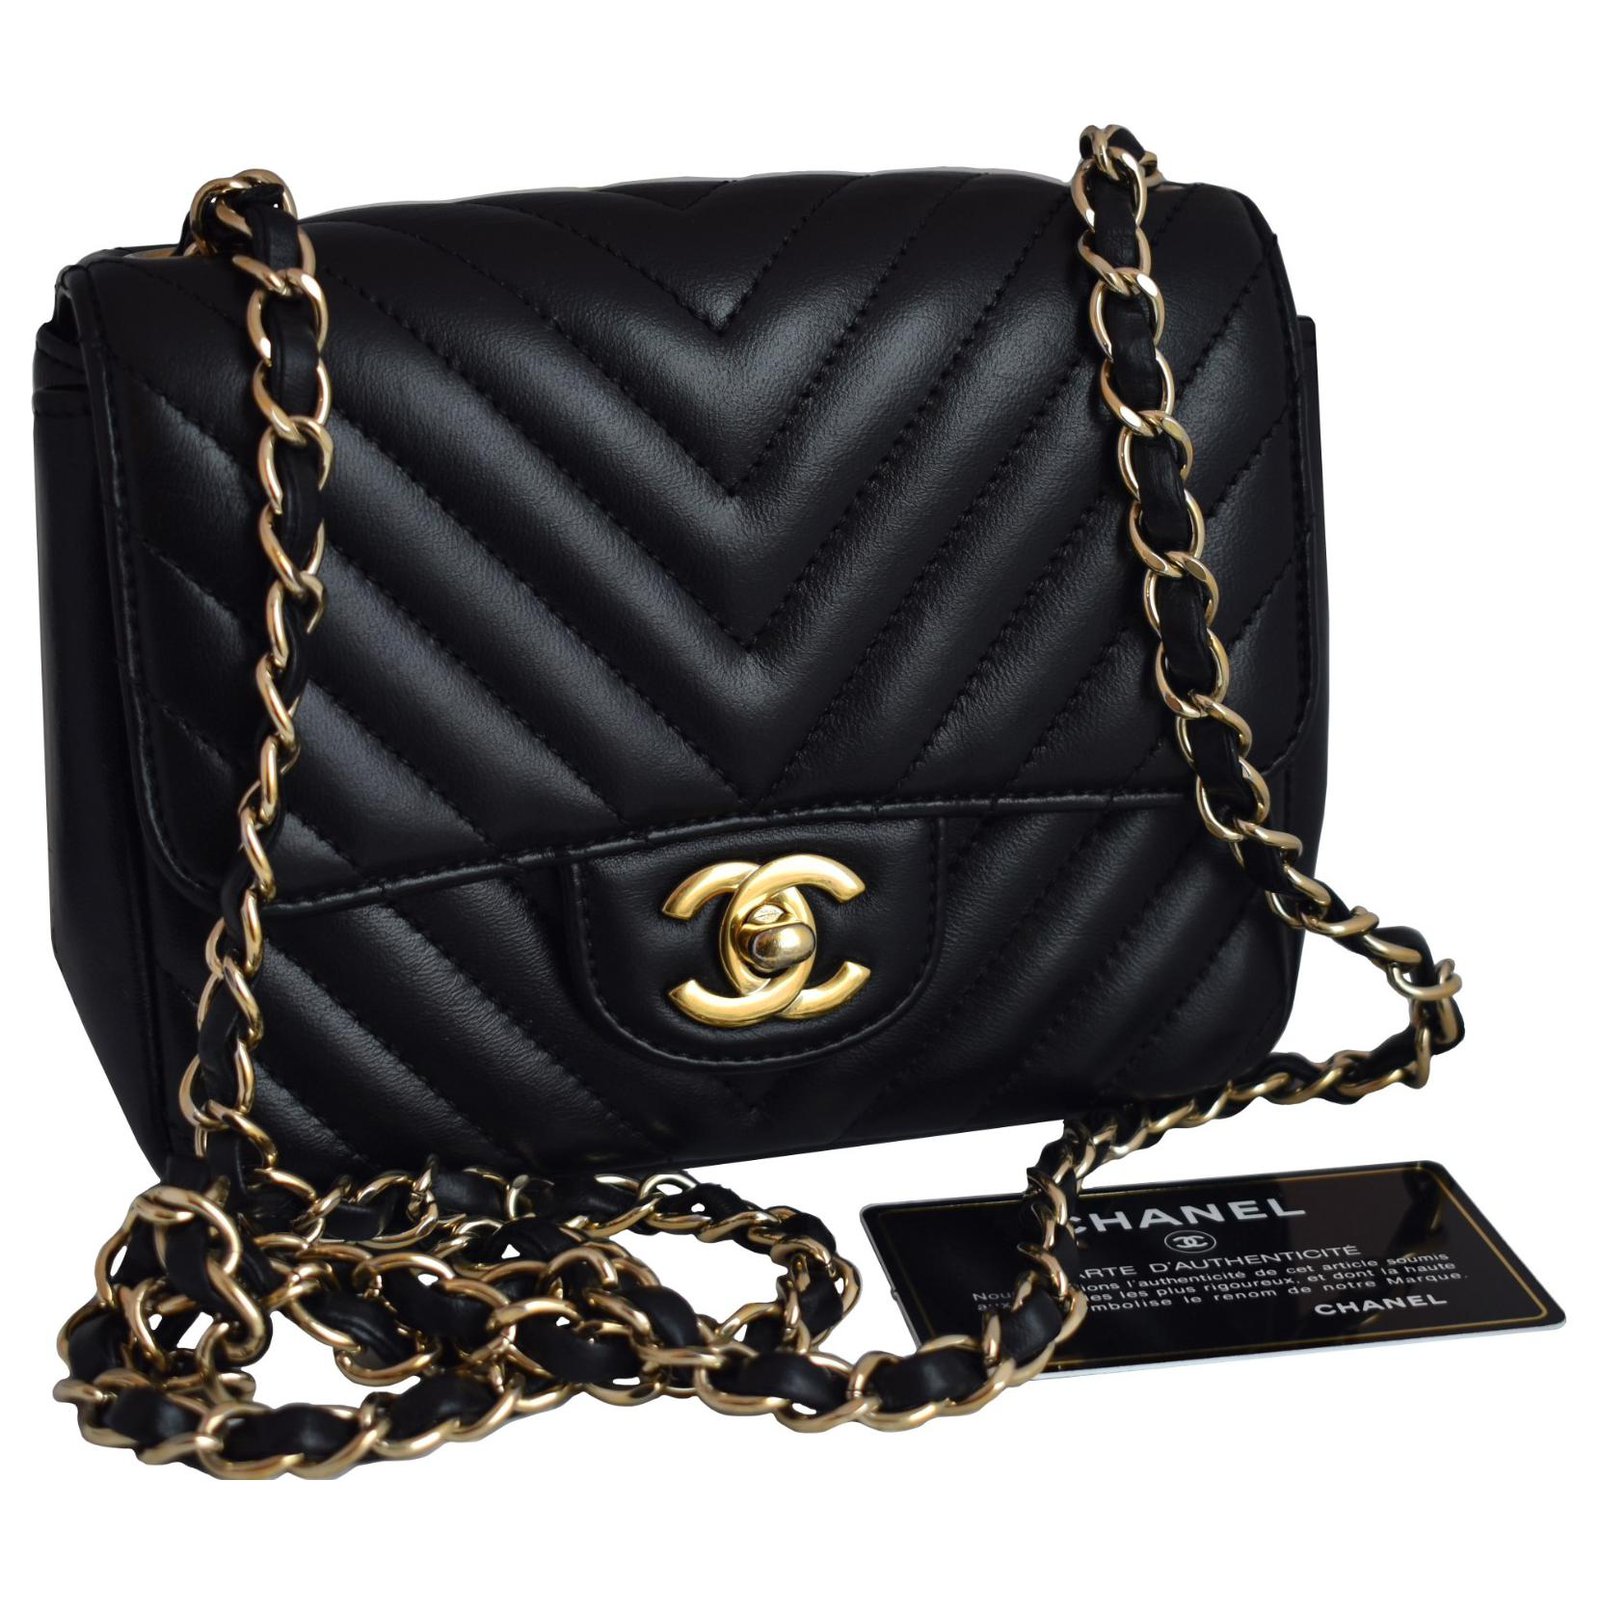 Chanel Chevron Flap Bag in Black